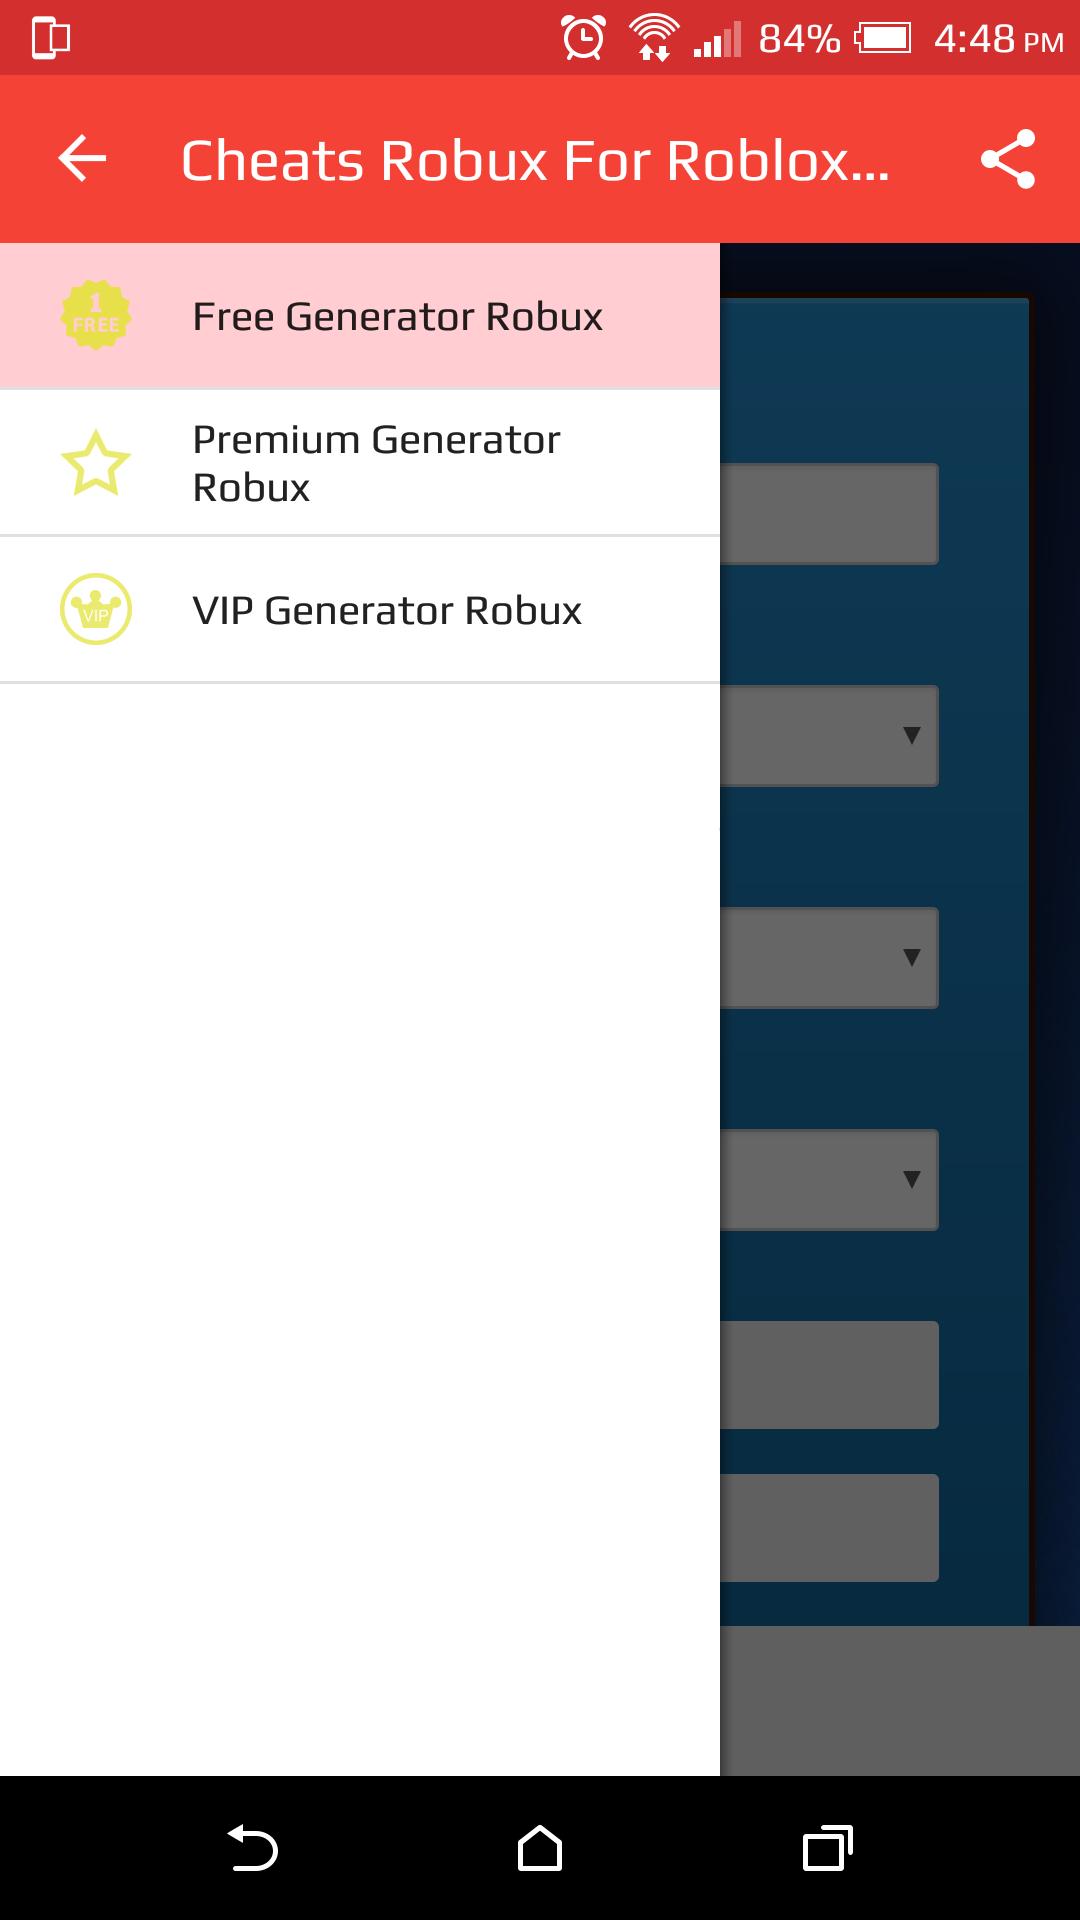 Cheats Robux For Roblox Prank fÃ¼r Android - APK herunterladen - 